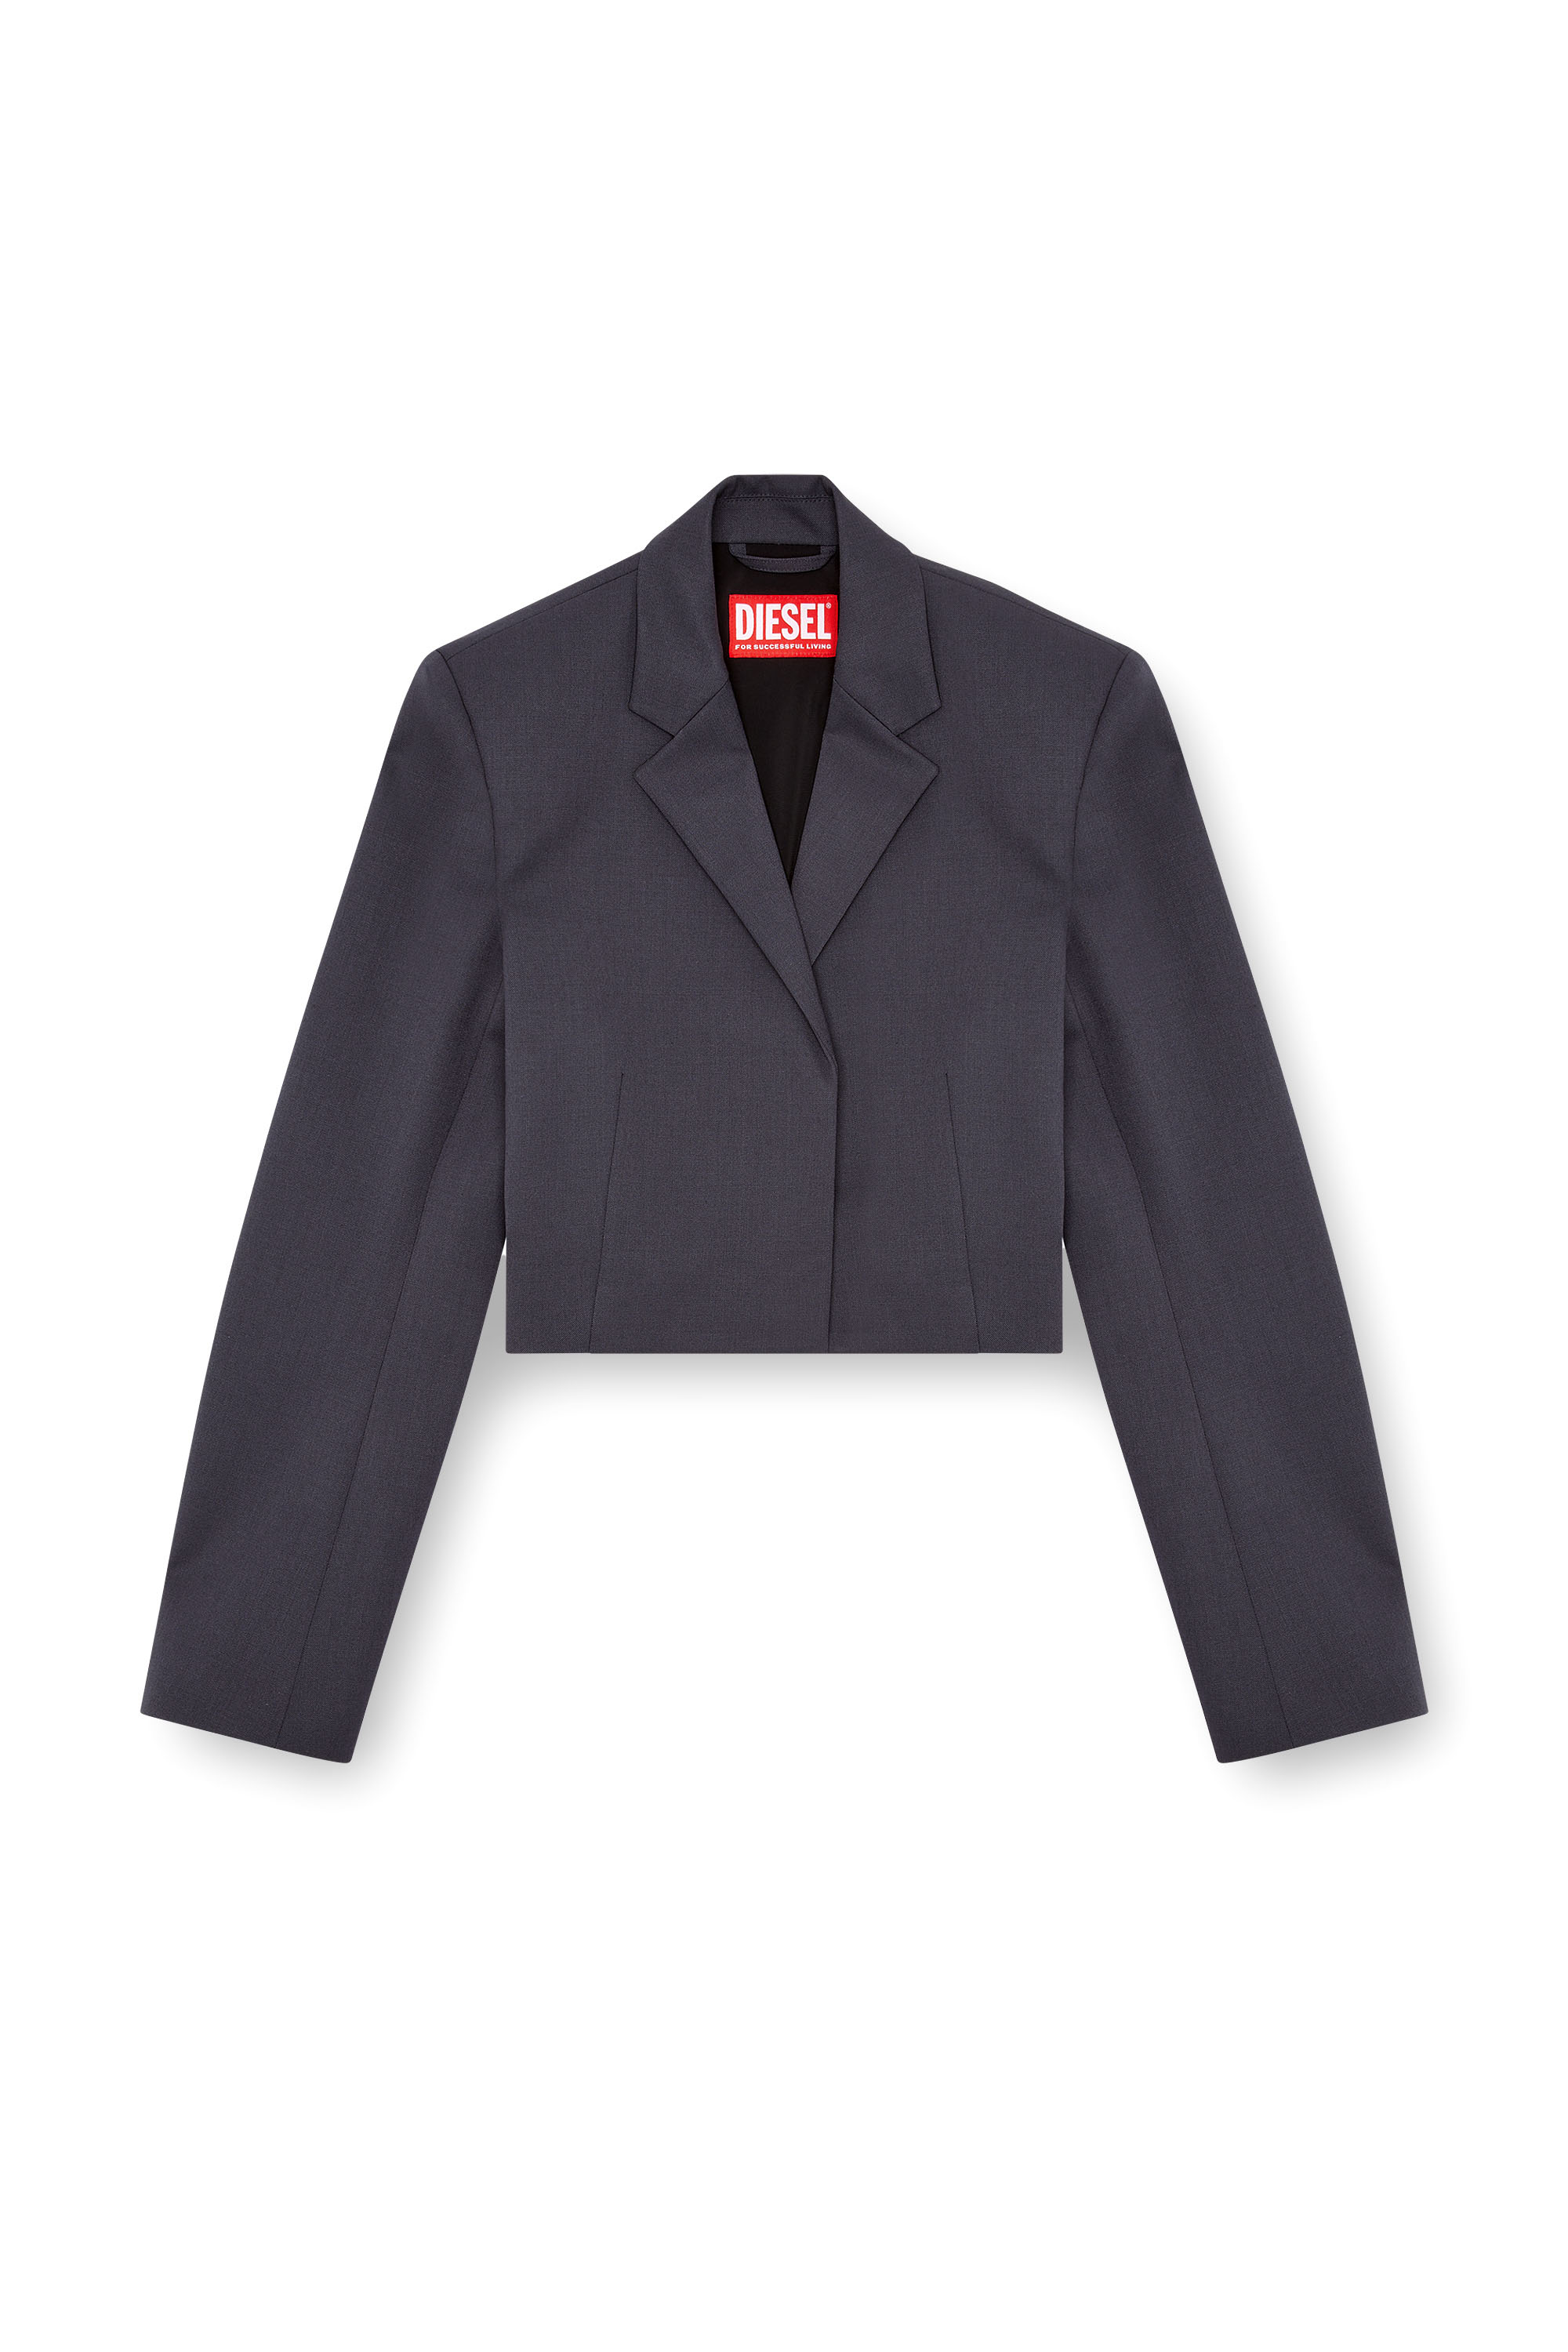 Diesel - G-MILLA-P1, Woman Cropped blazer in stretch wool blend in Grey - Image 6